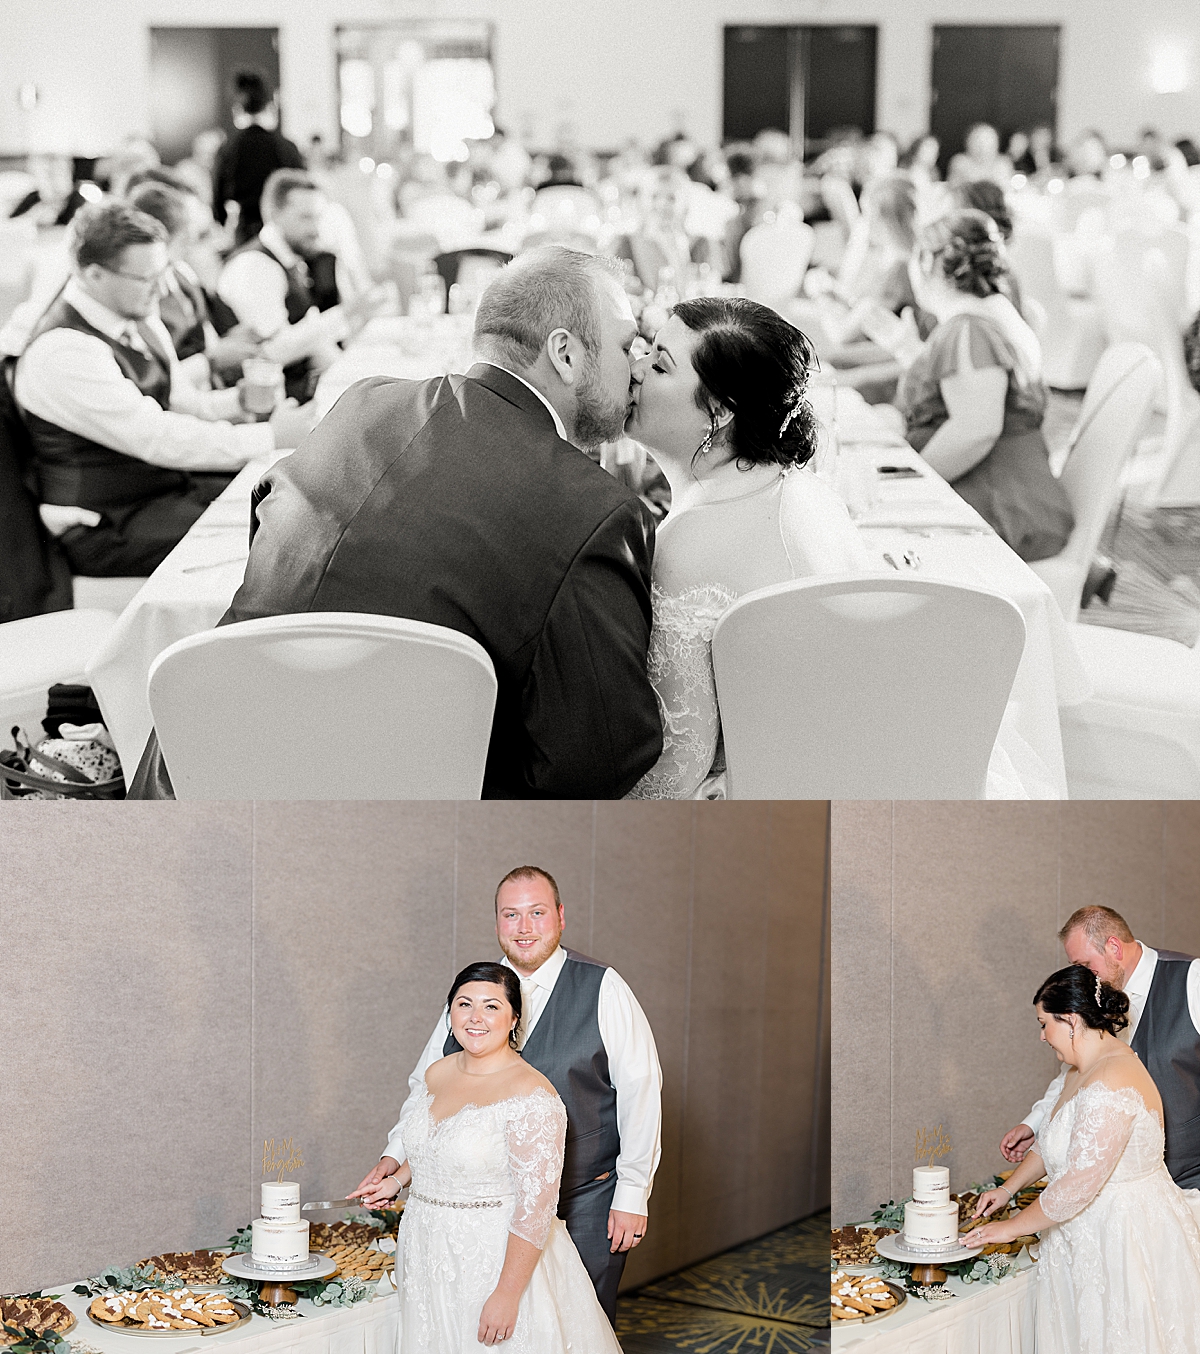 bride and groom cutting wedding cake at Hilton Garden Inn reception hall 